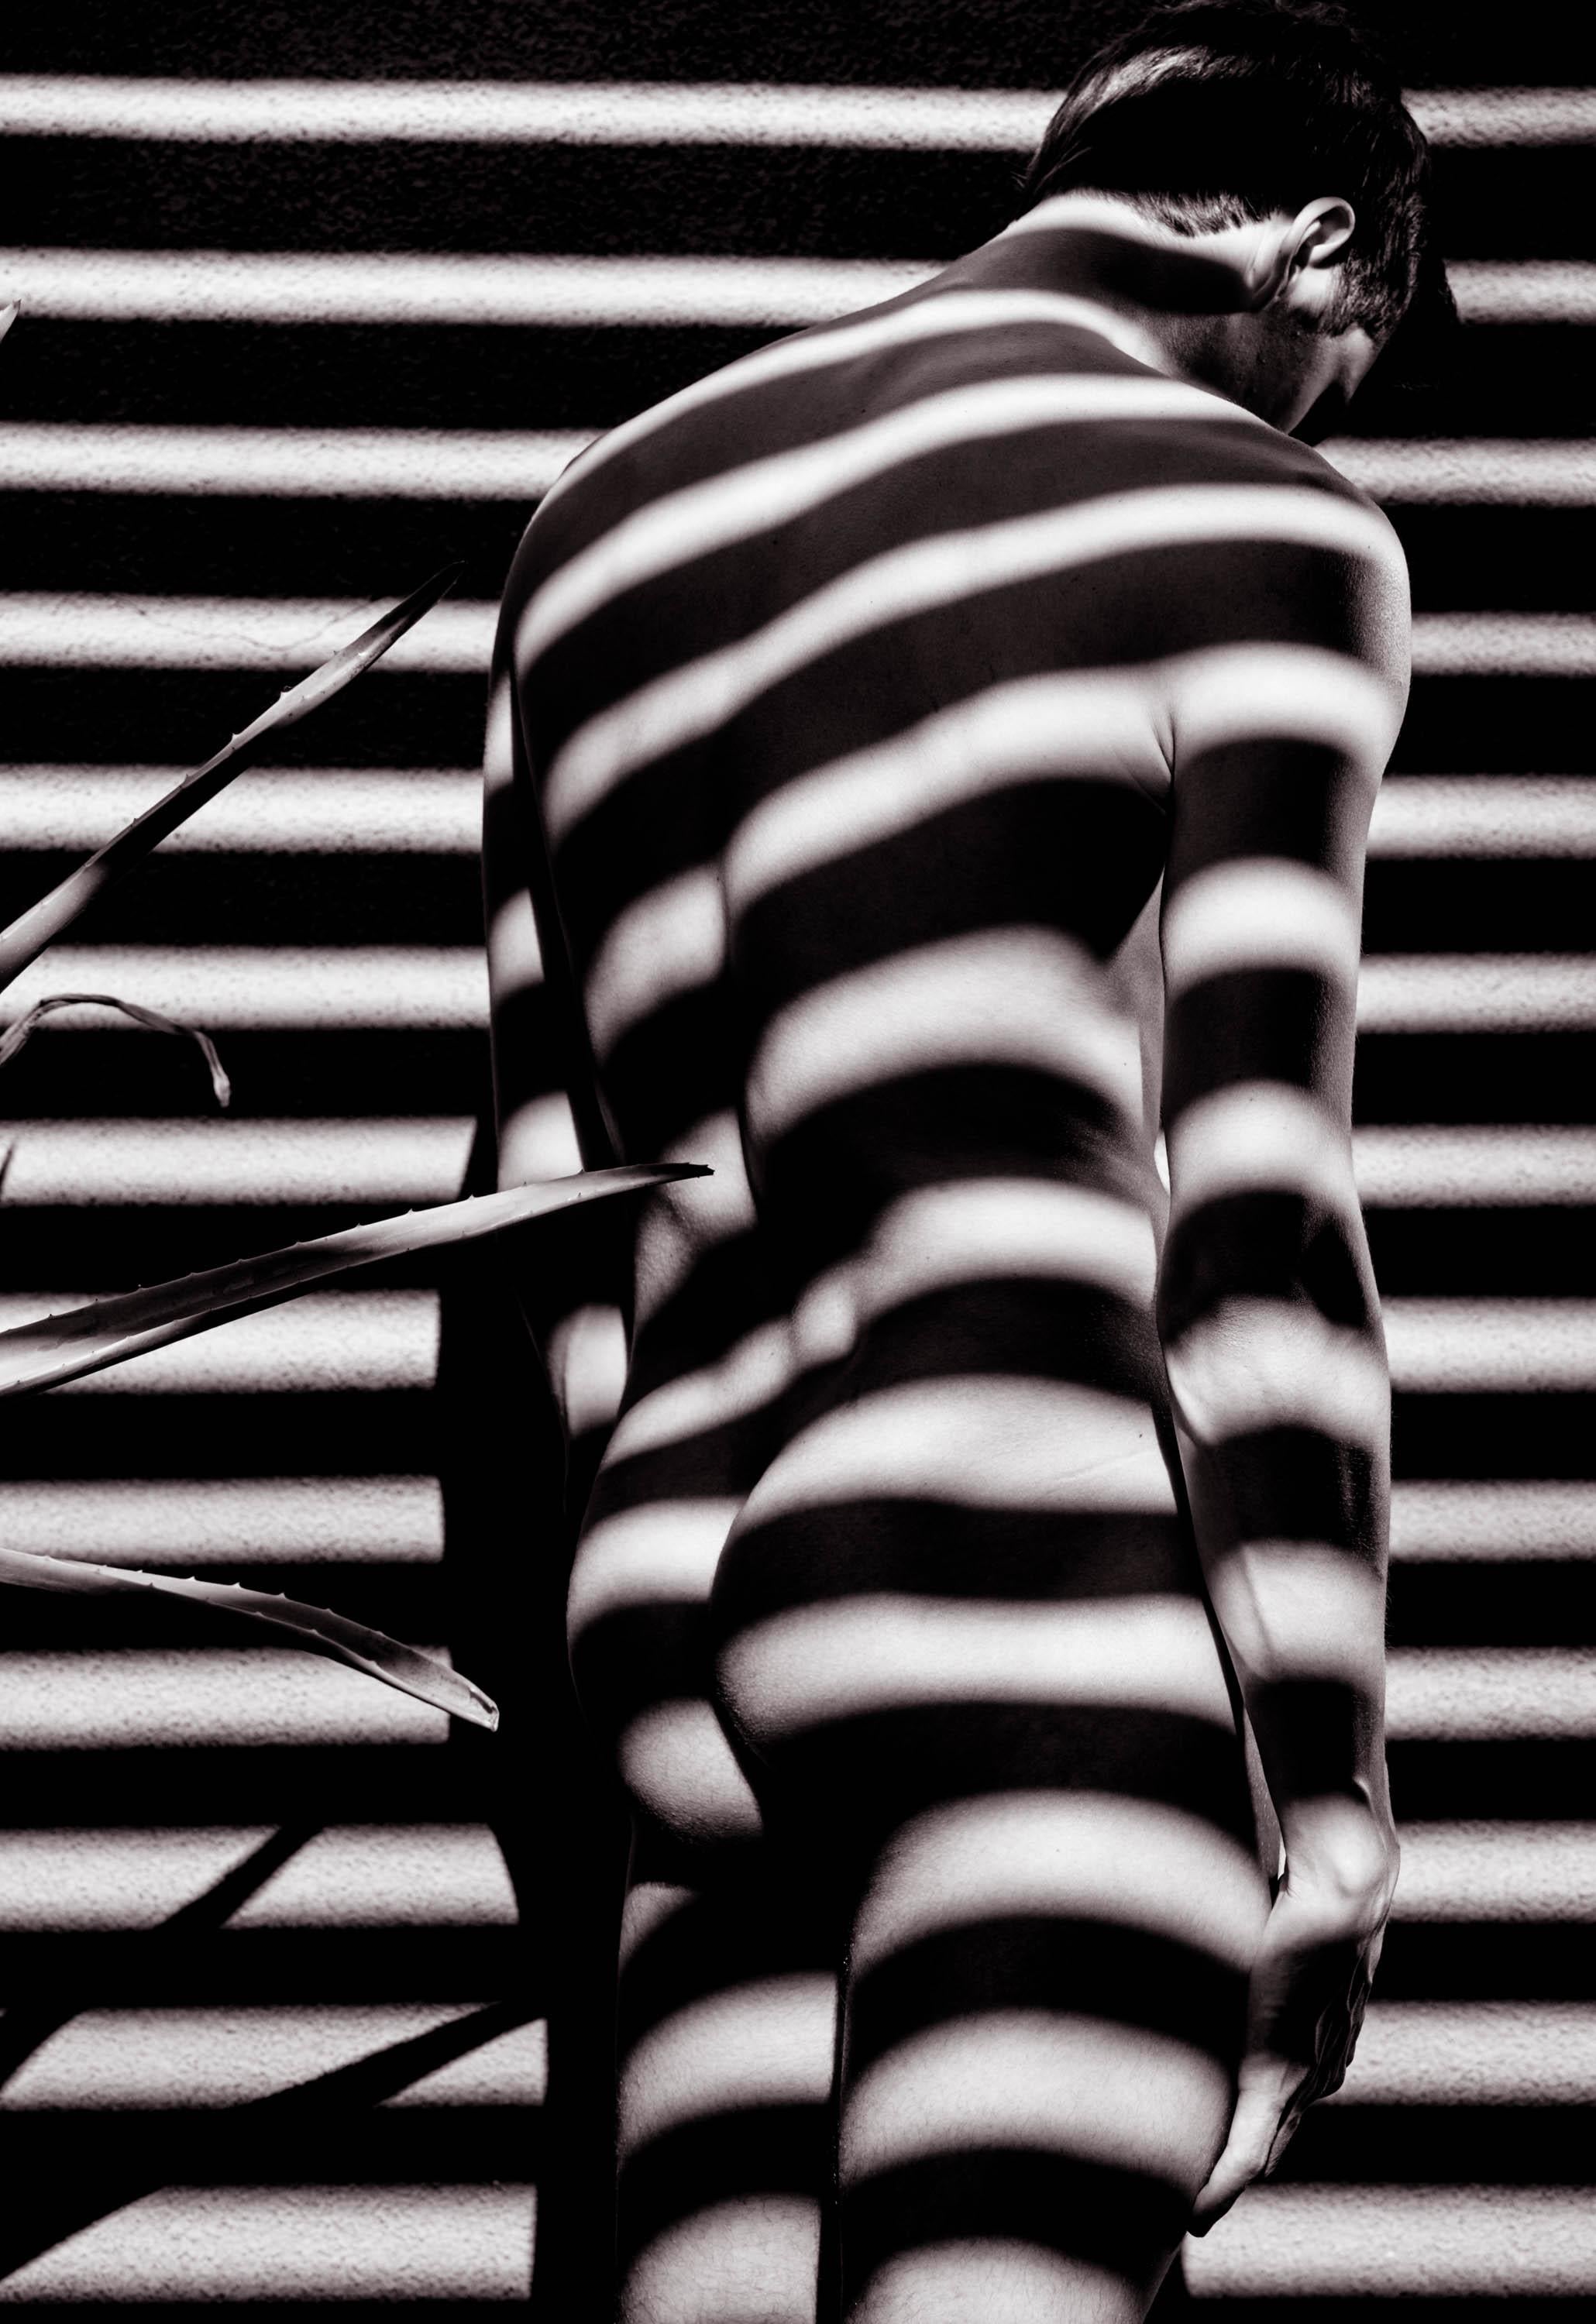 Greg Gorman Nude Photograph - Frederick Collier, 21st Century, Contemporary, Celebrity, Photography